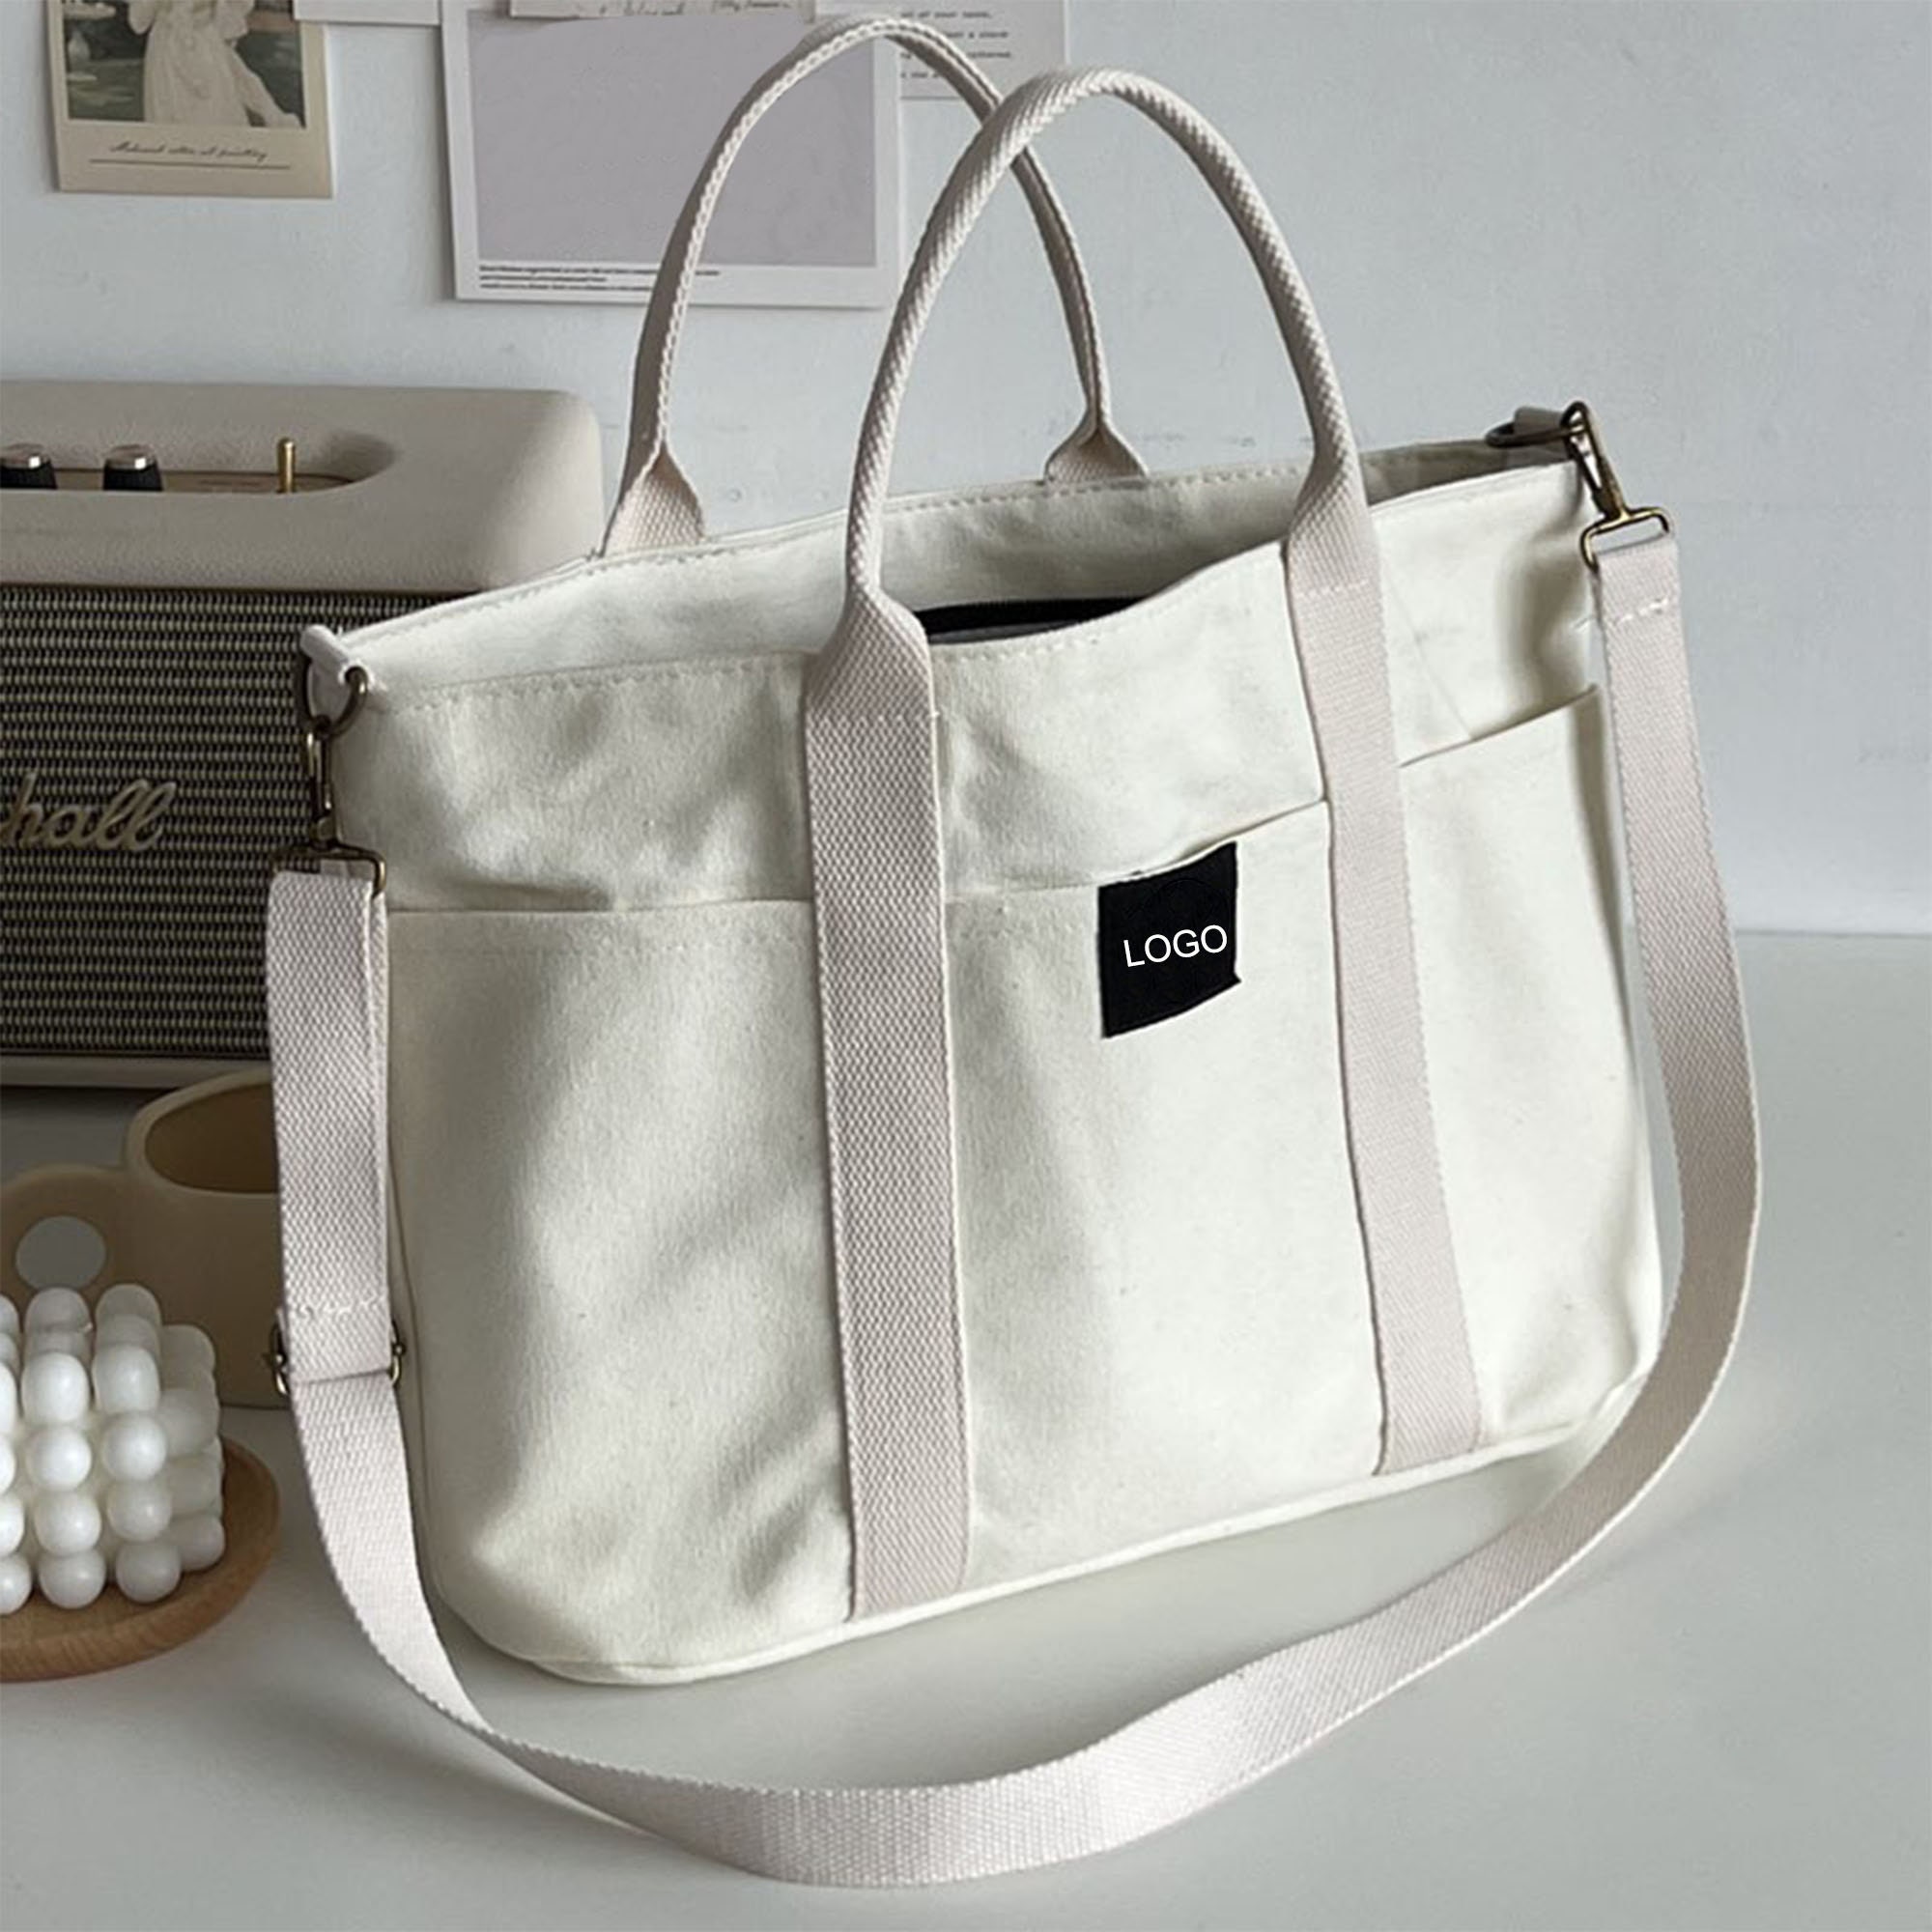 NWT Virgil Abloh X Ikea Markerad Sculpture Bag  White leather backpack,  White handbag, Off white bag